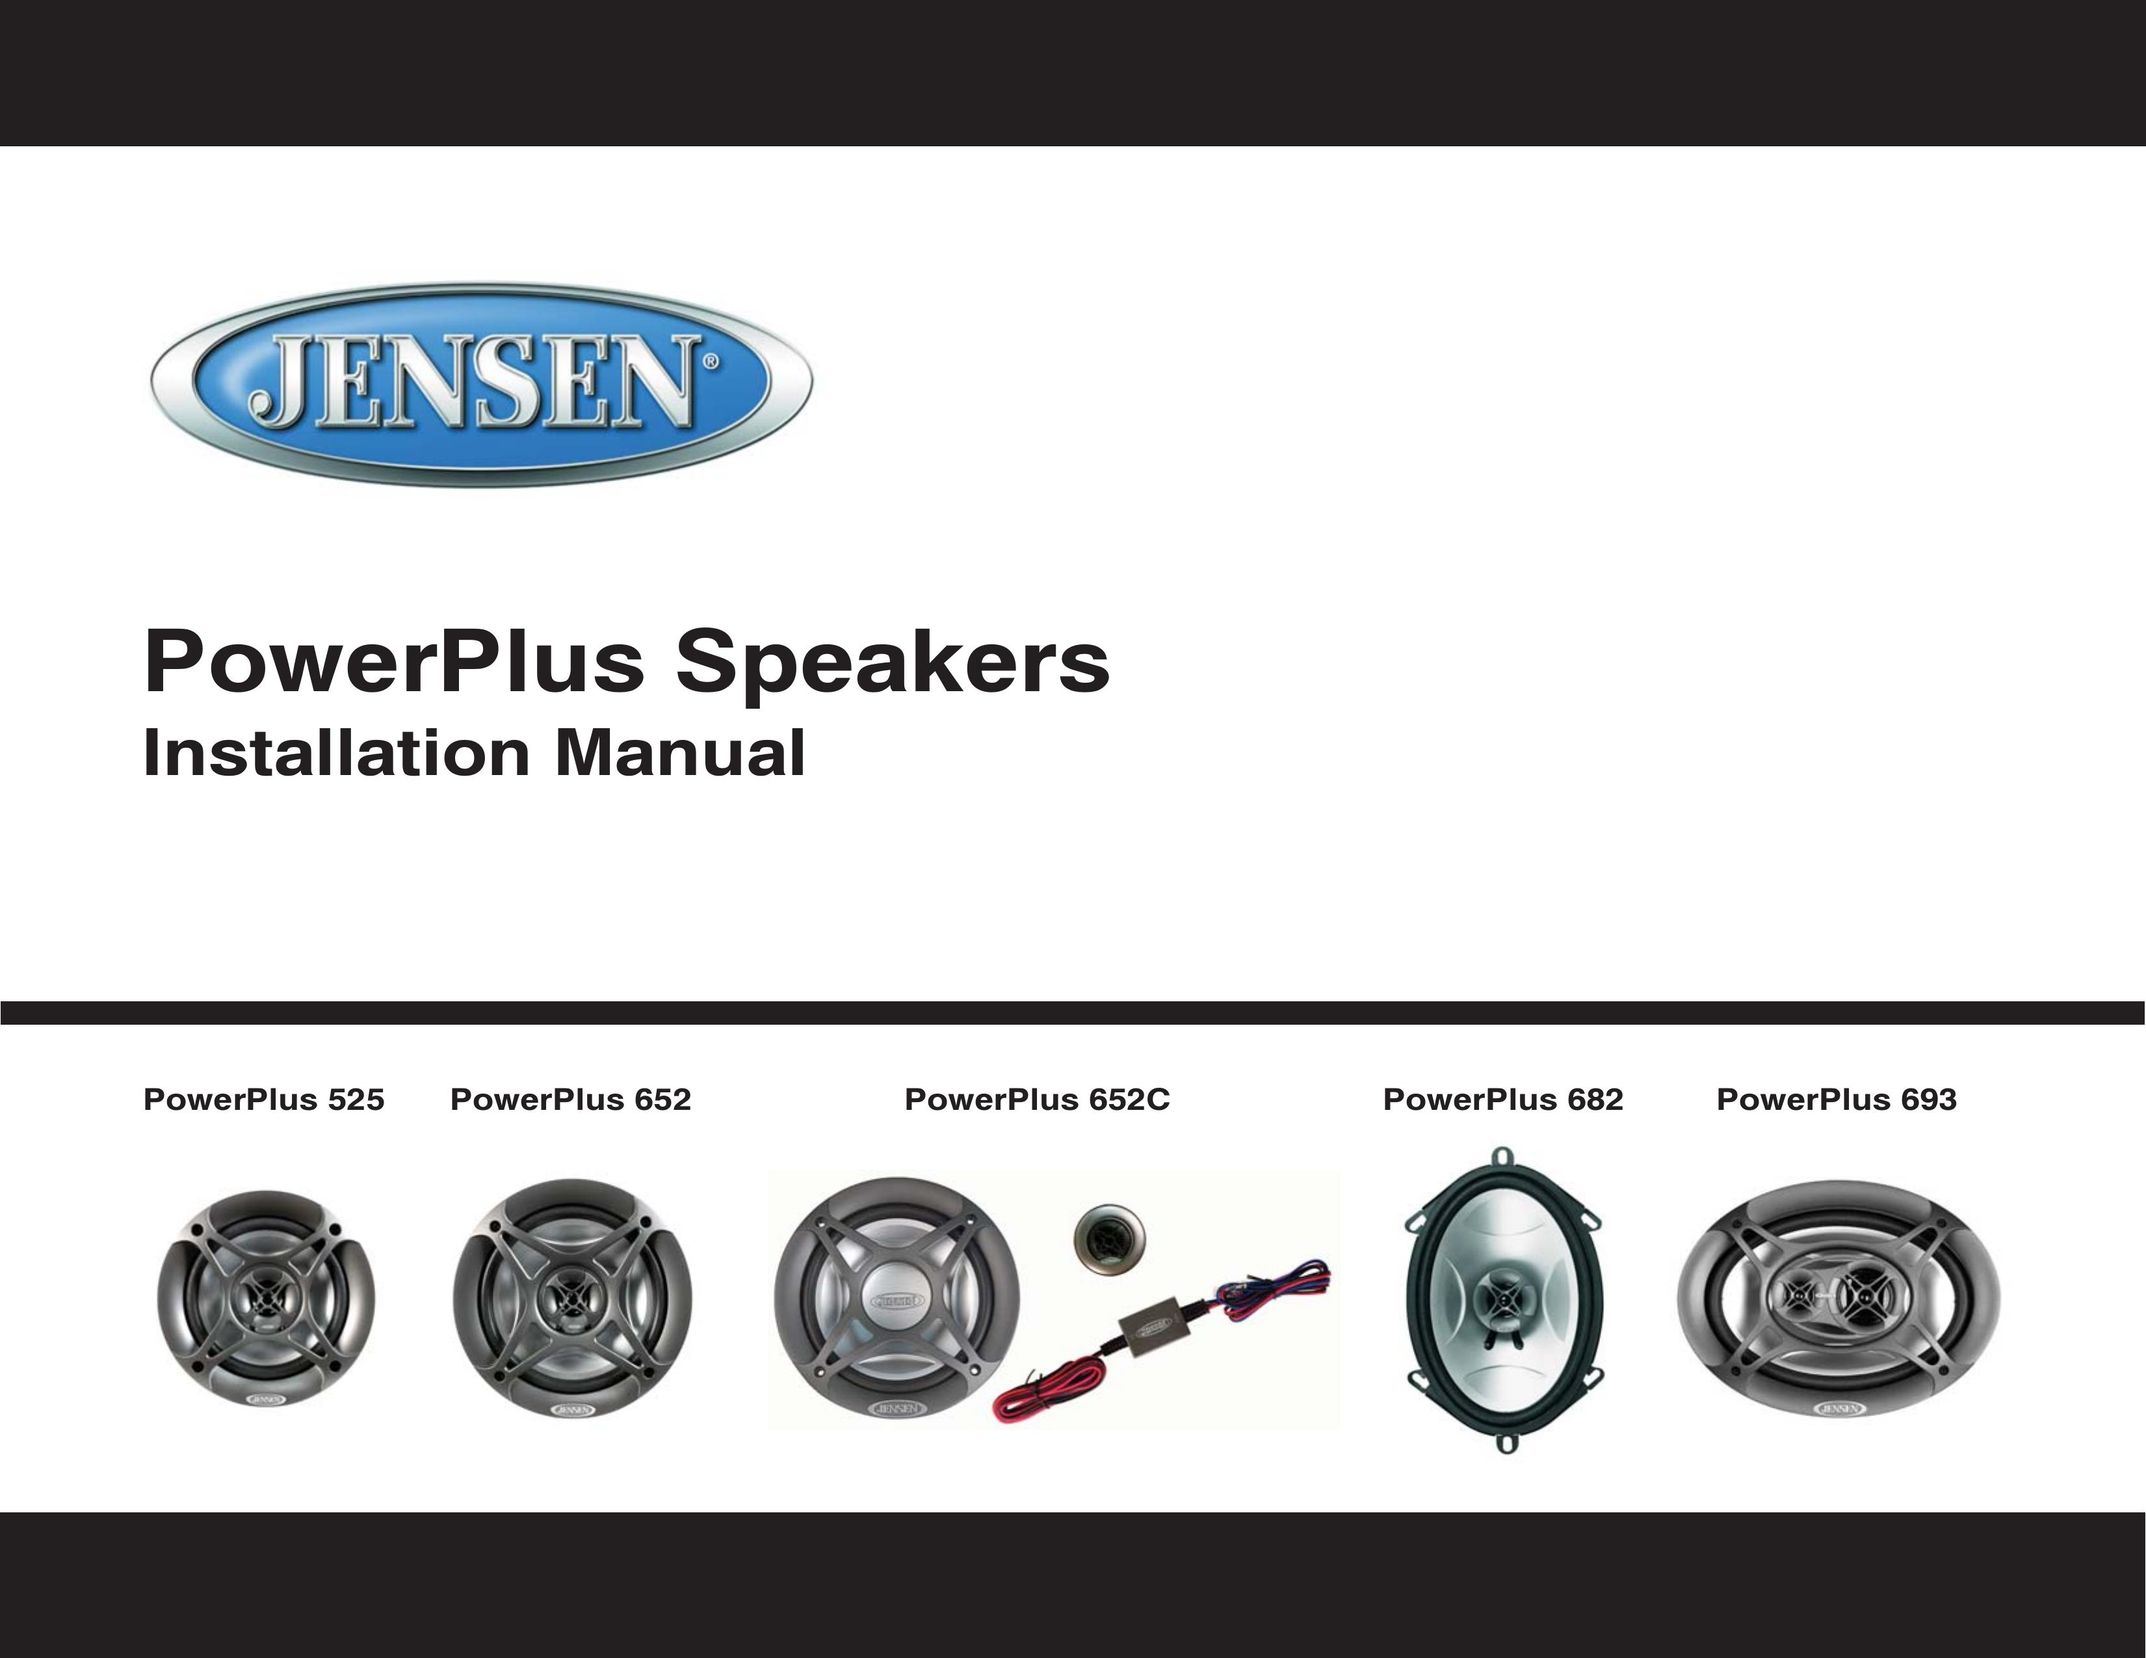 Jensen 693 Car Speaker User Manual